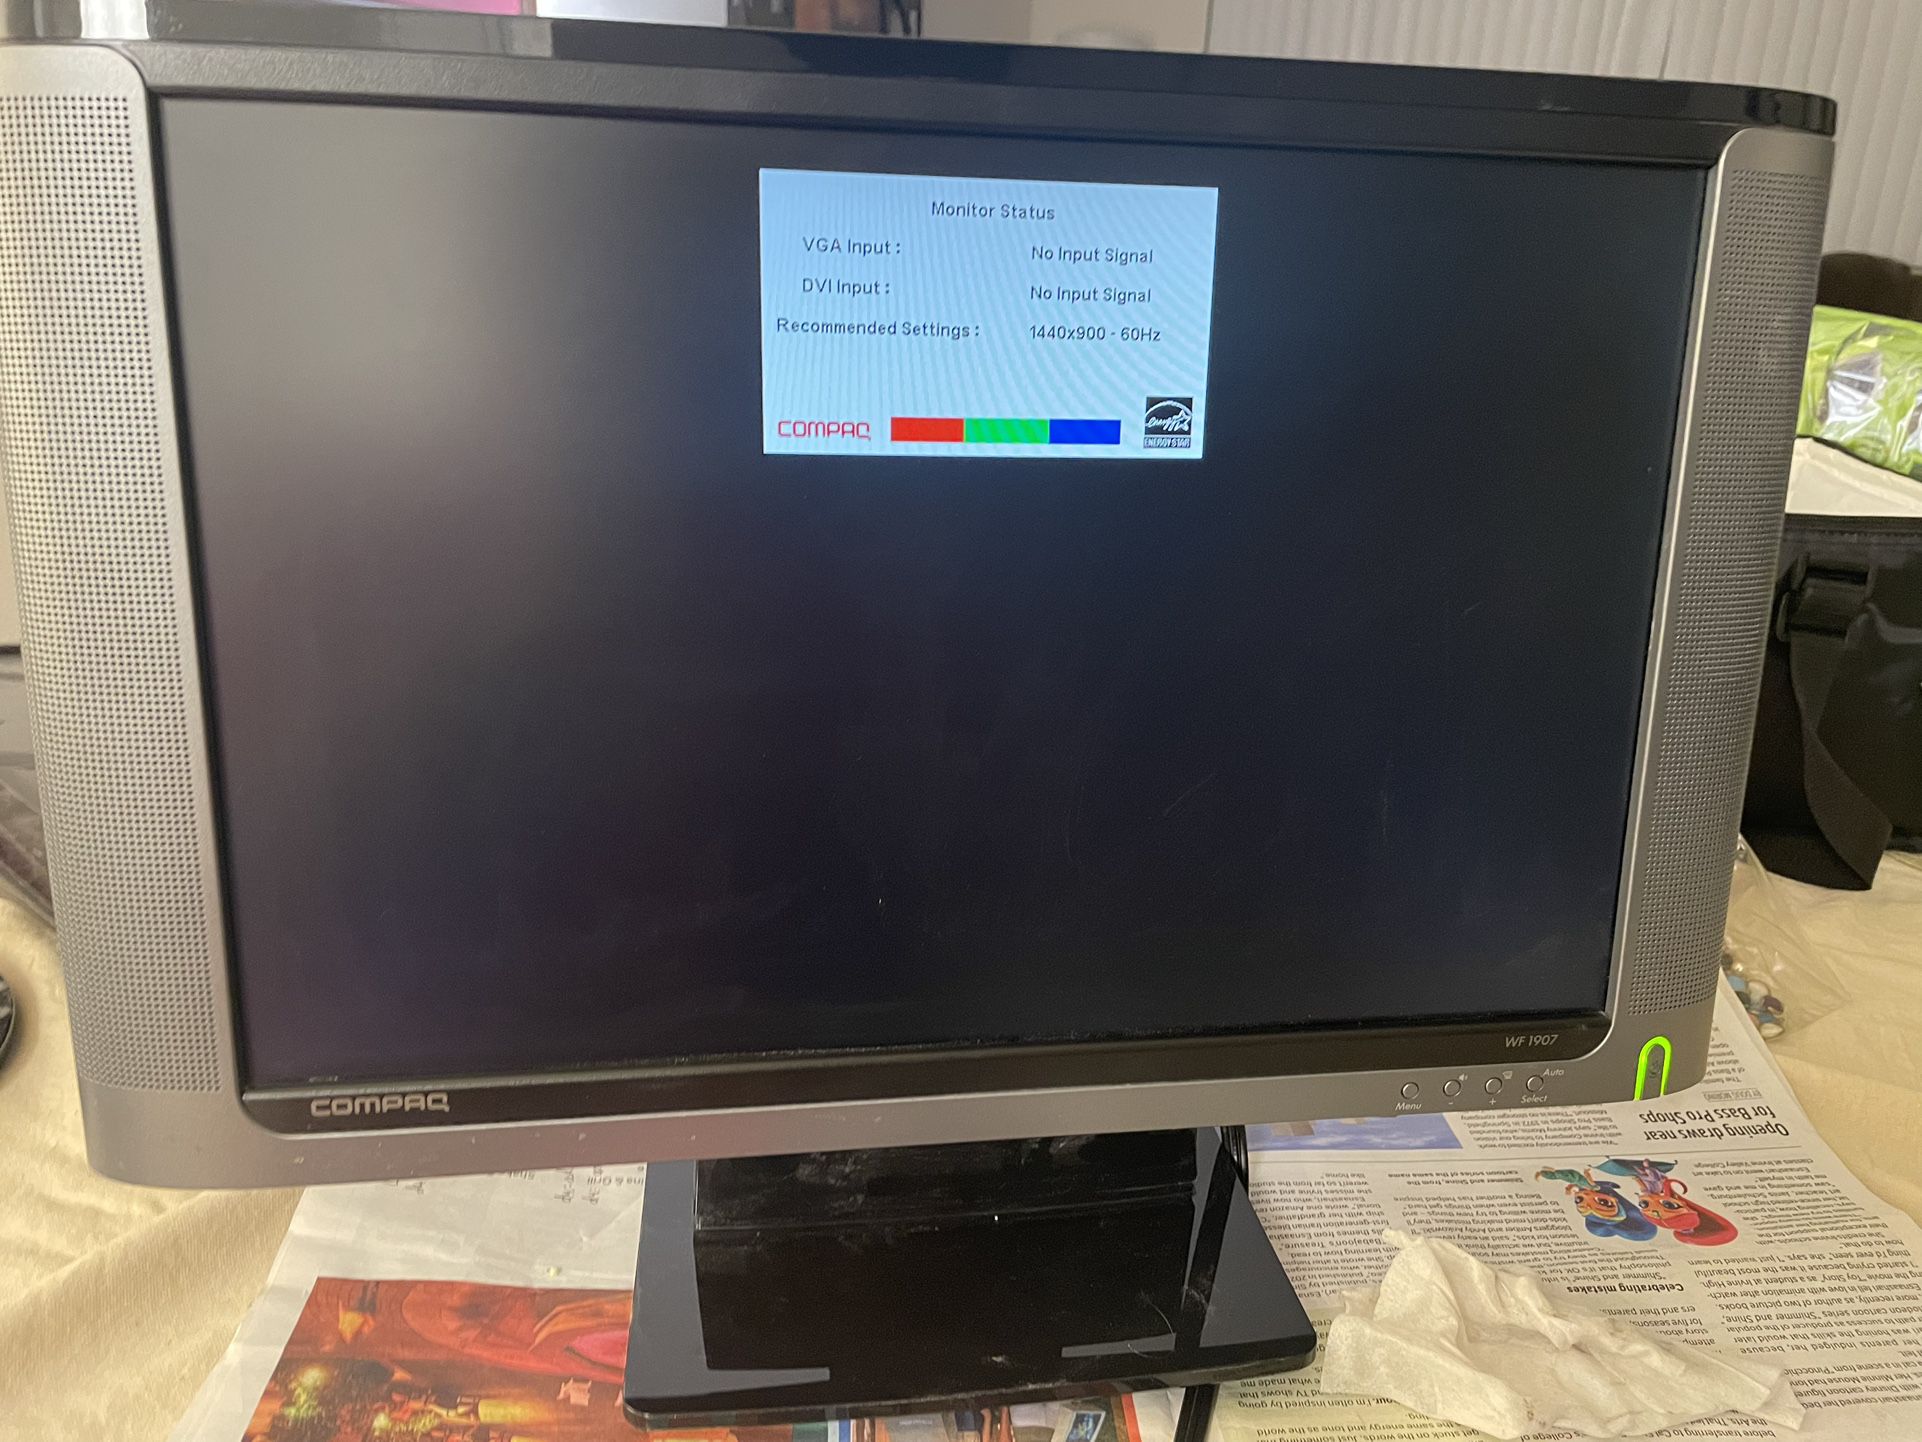 Compaq WF1907 19” Computer Monitor 1440x900 Resolution